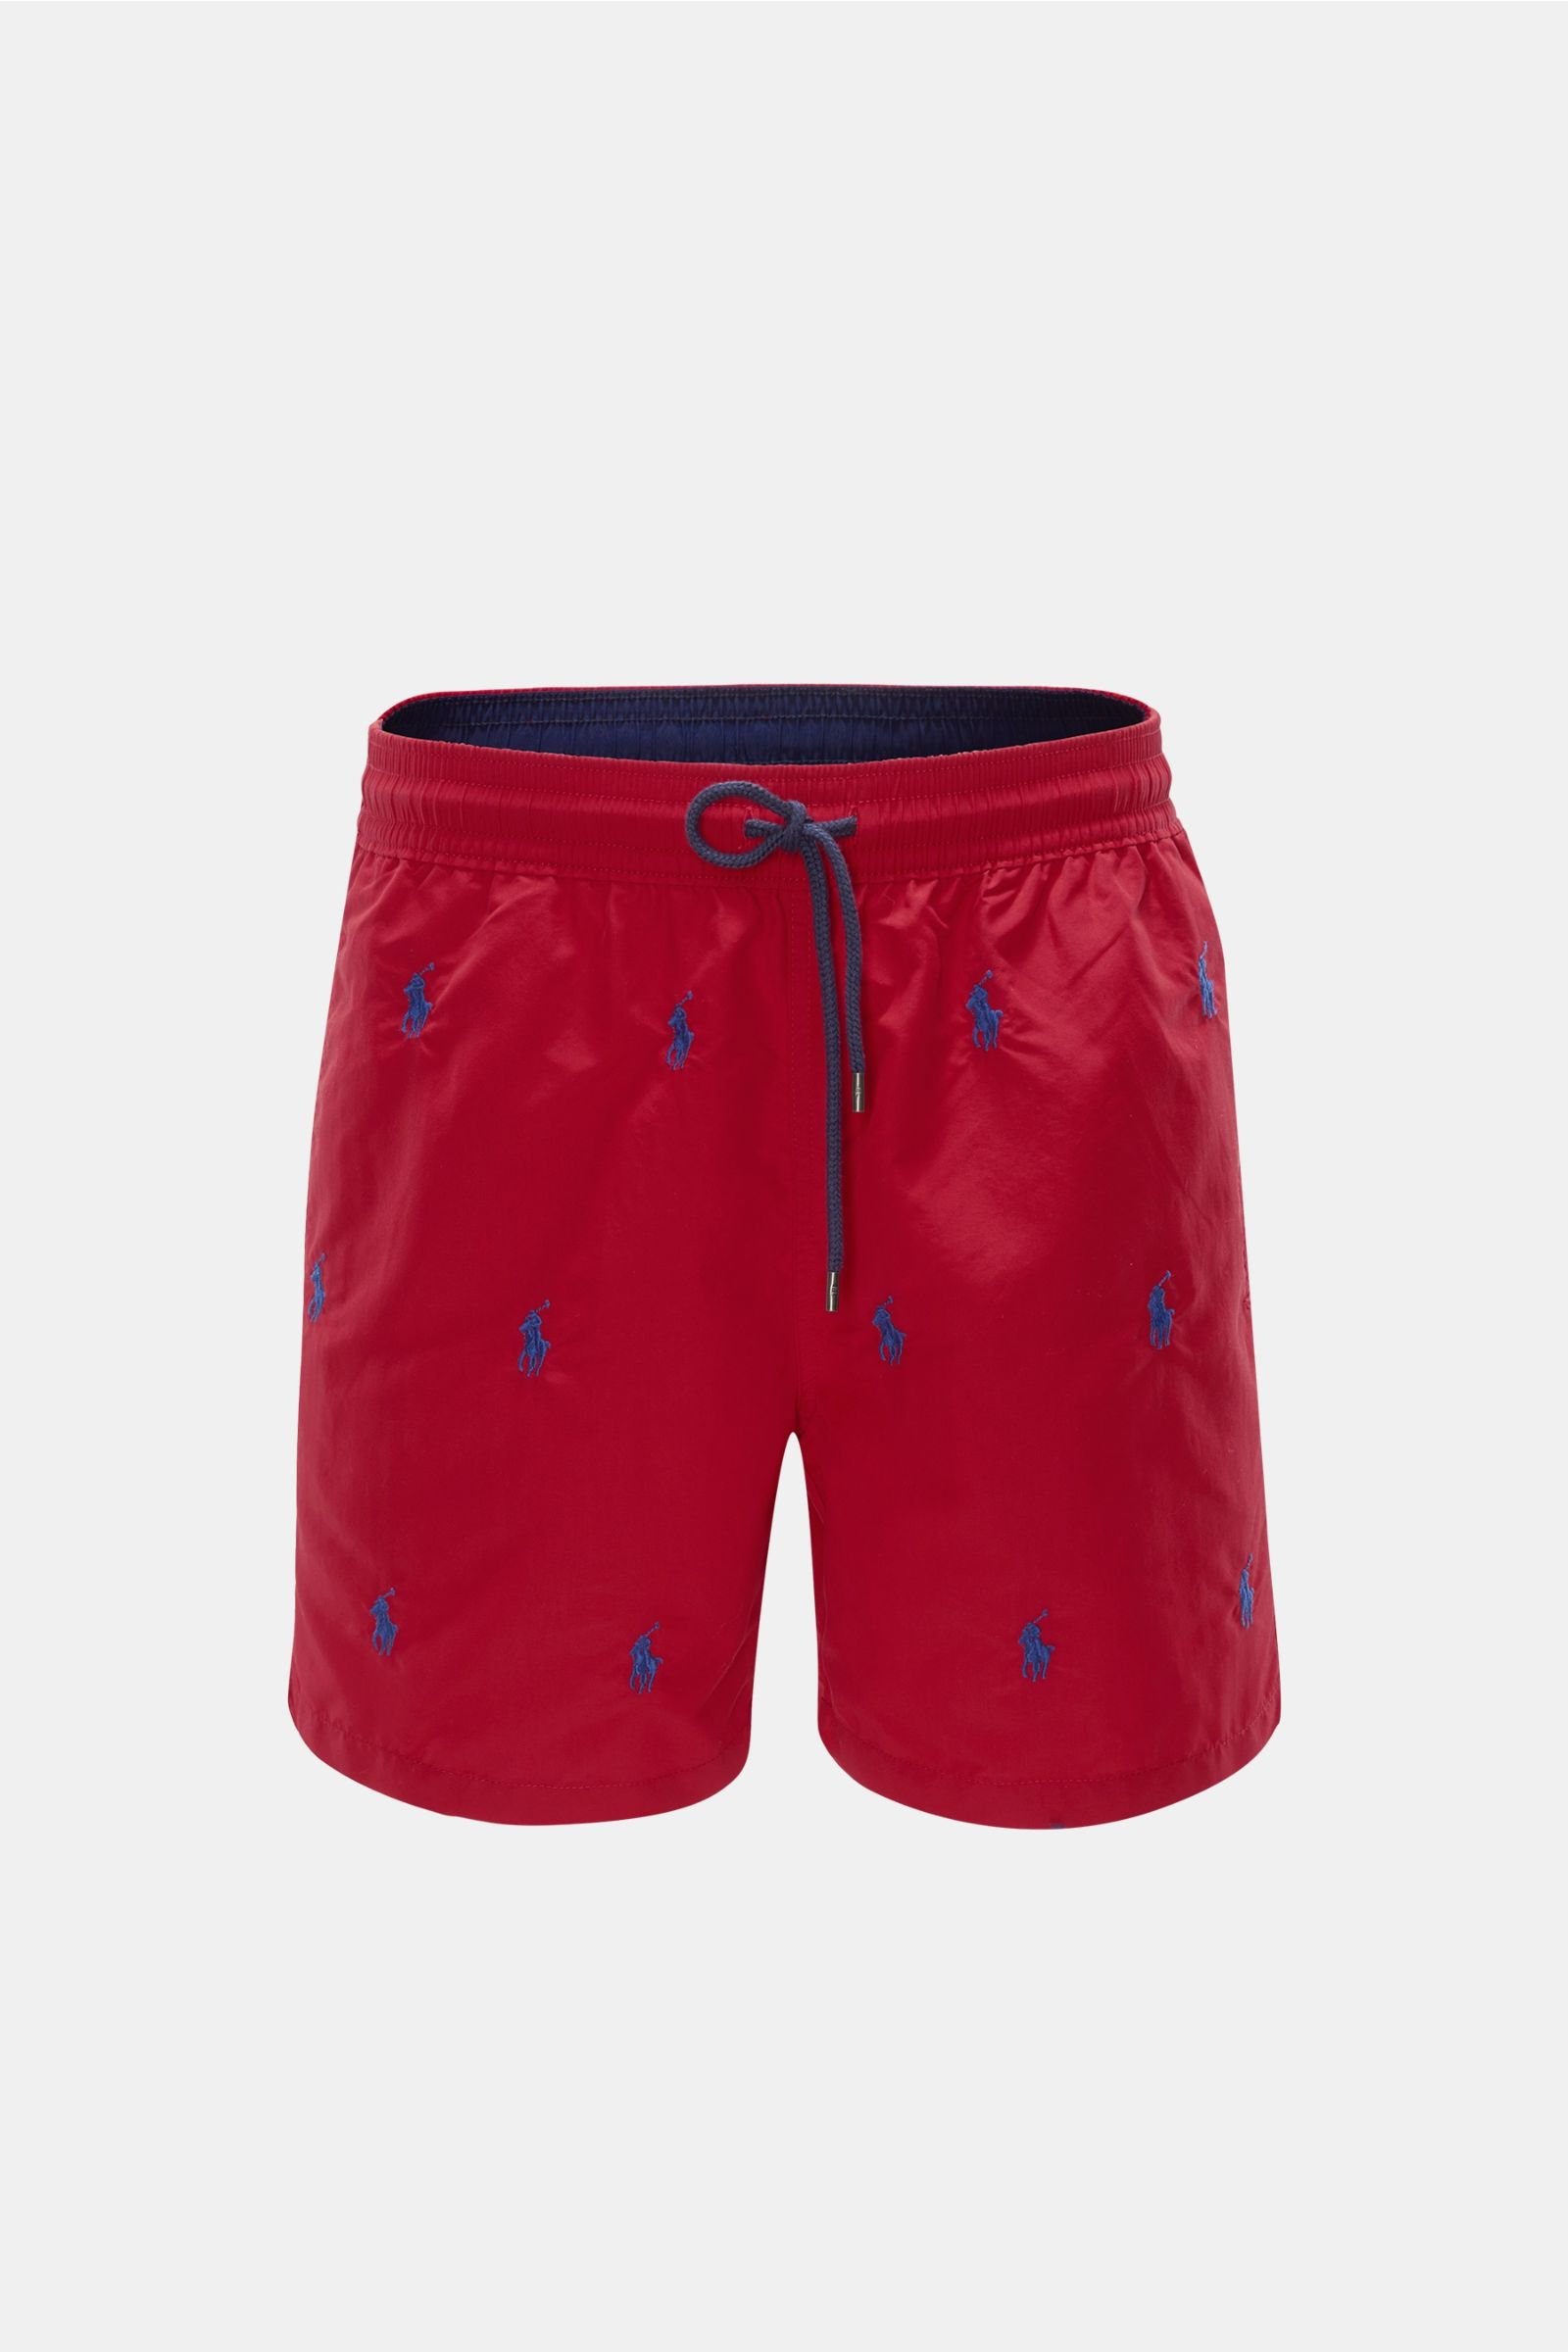 Swim shorts red